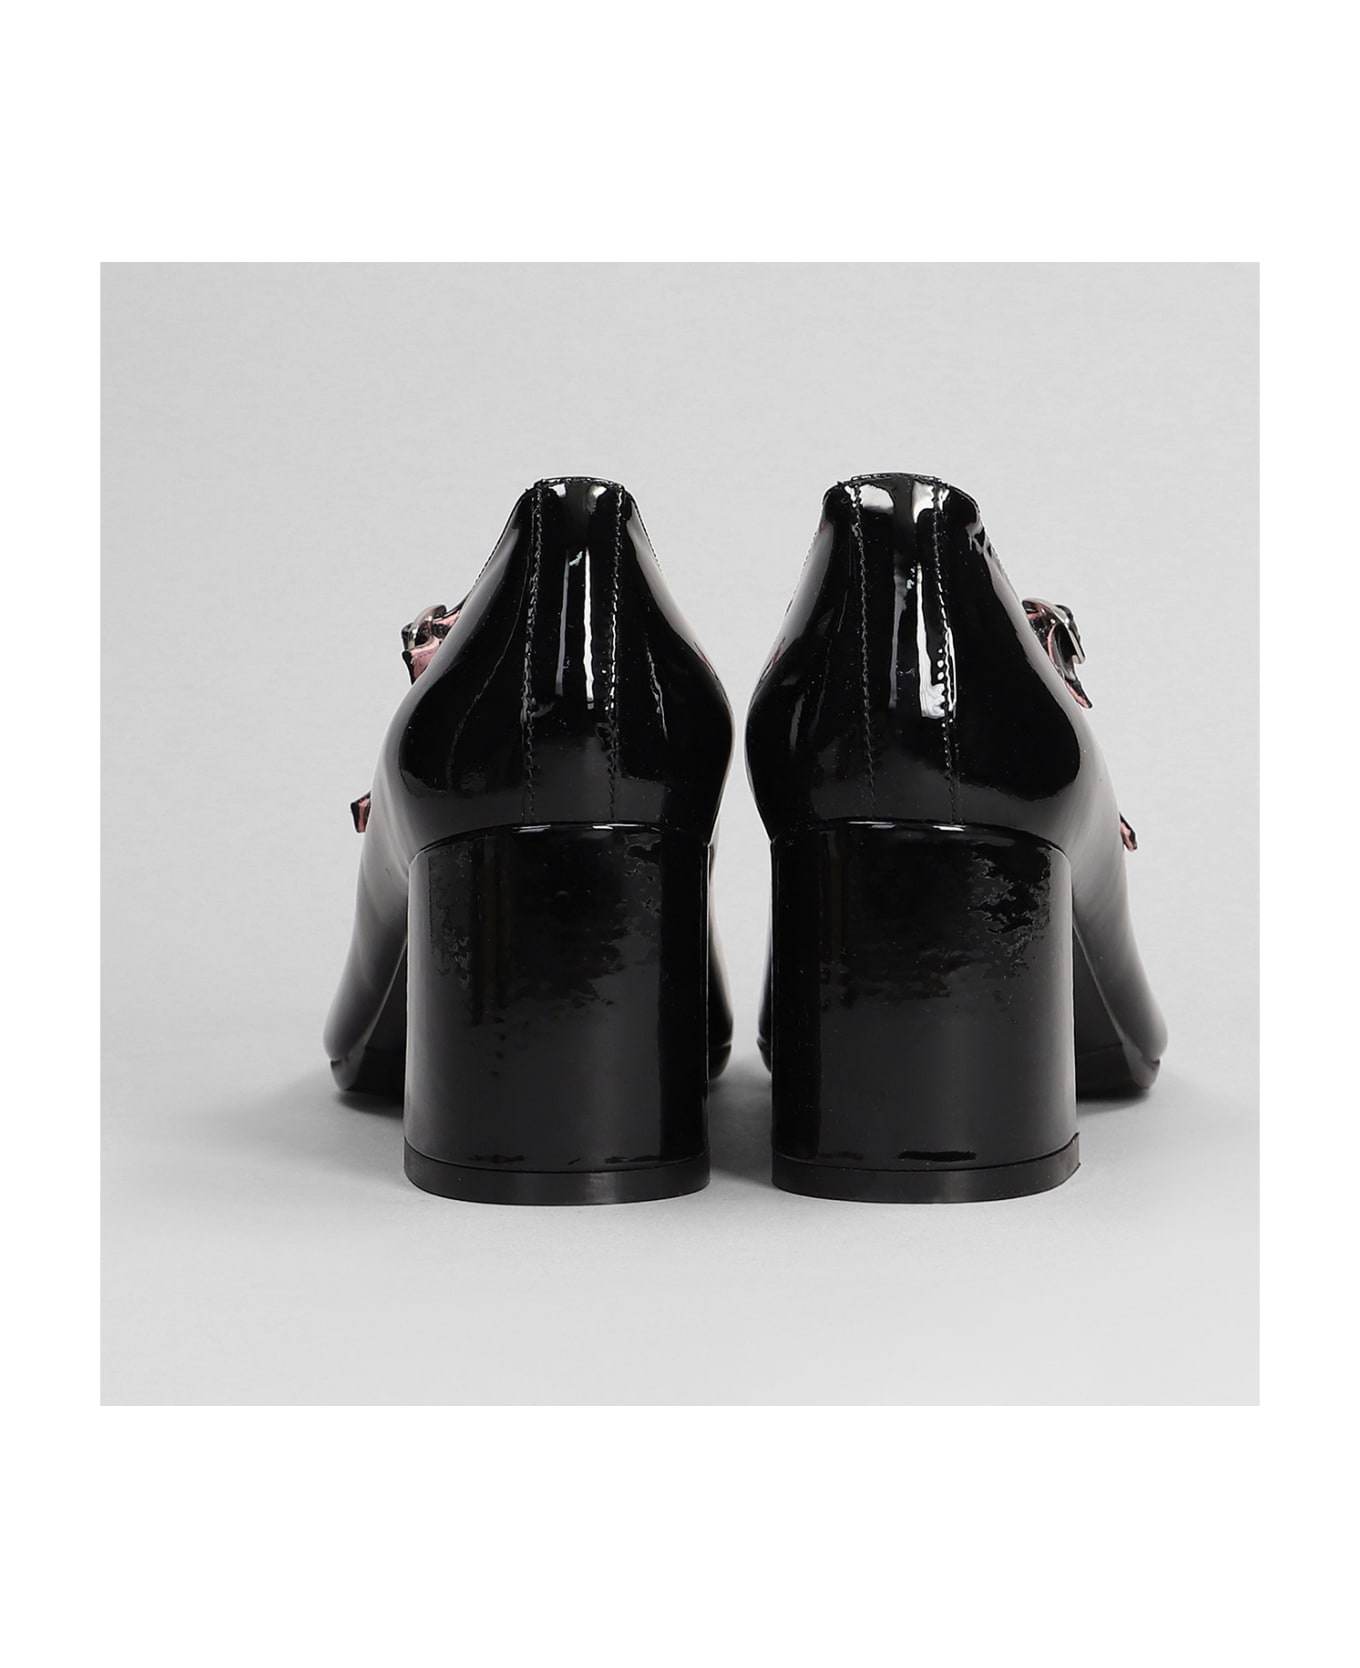 Carel Alice Pumps In Black Patent Leather - black ハイヒール